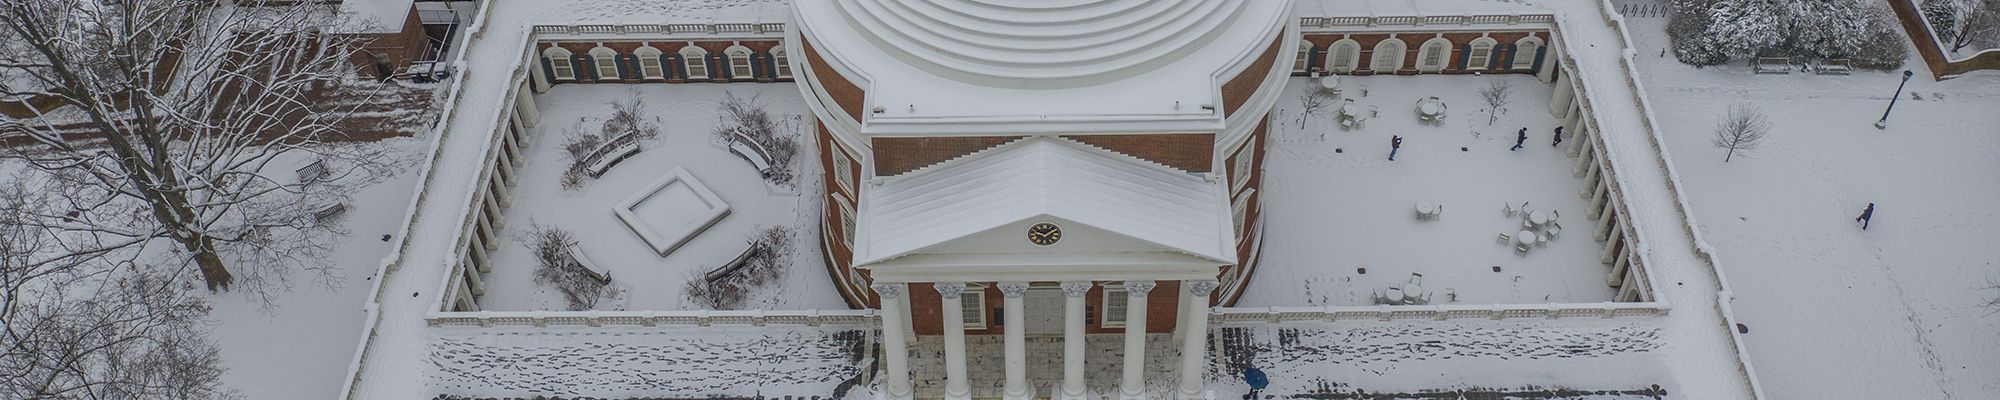 UVA Rotunda in snow